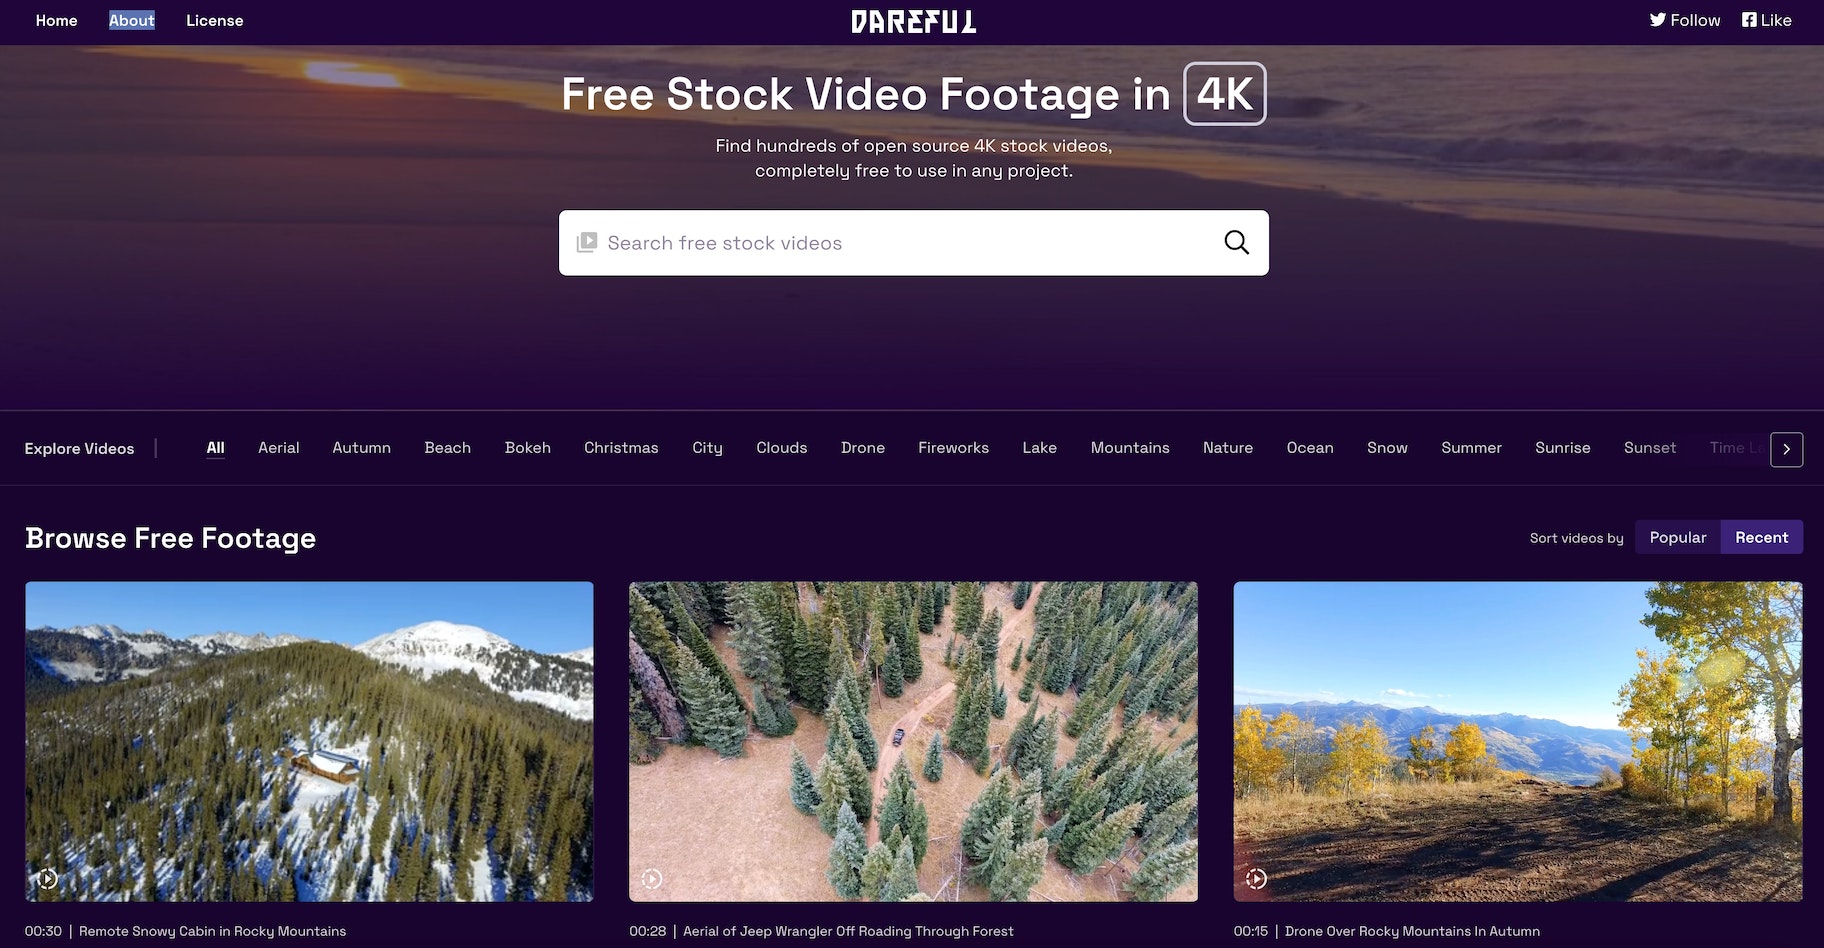 Dareful free 4k stock videos